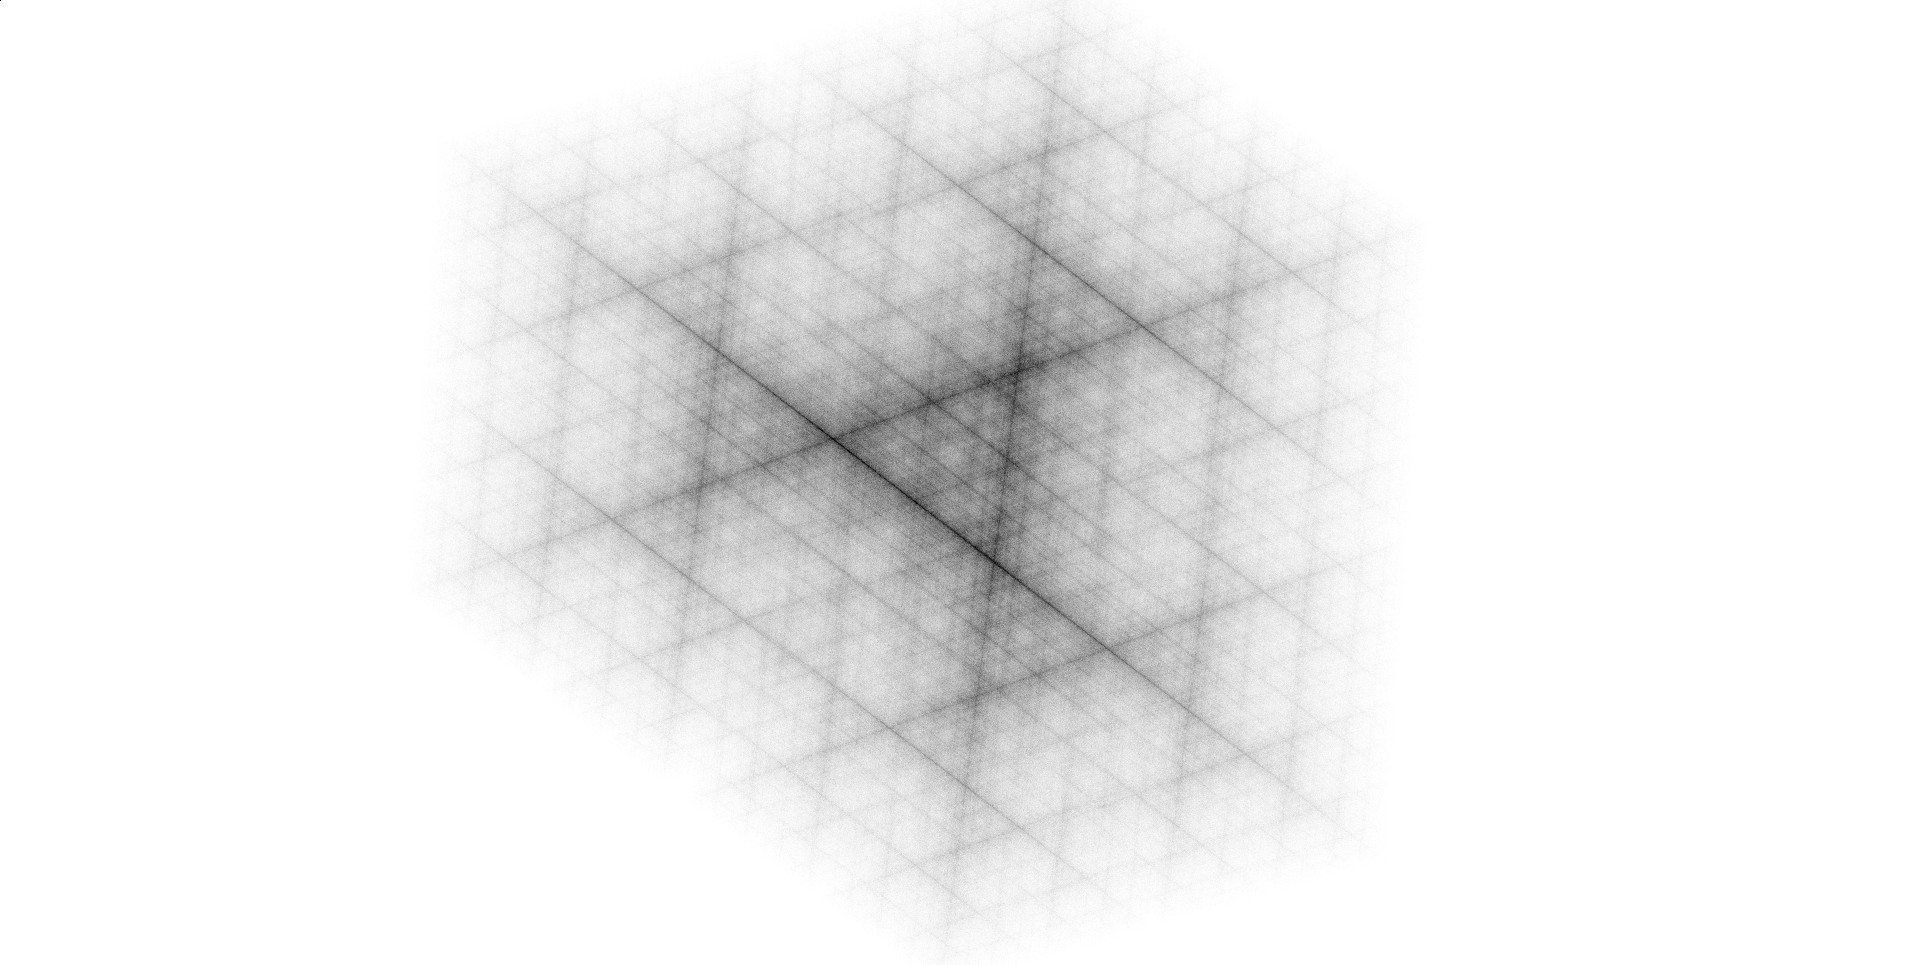 Hexagonal grid fractal